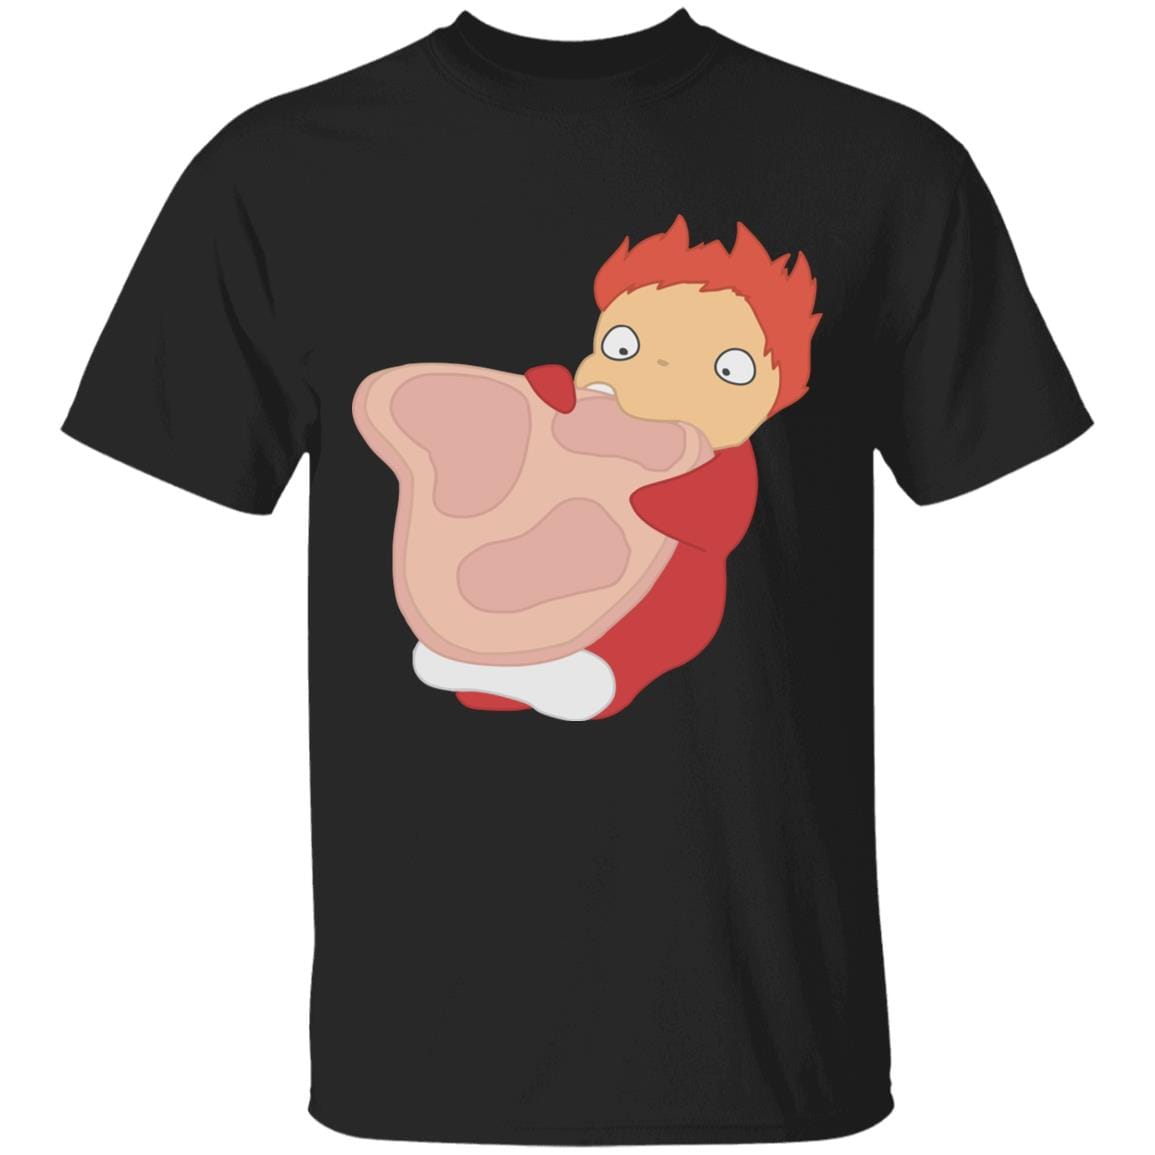 The Hungry Ponyo T Shirt Ghibli Store ghibli.store